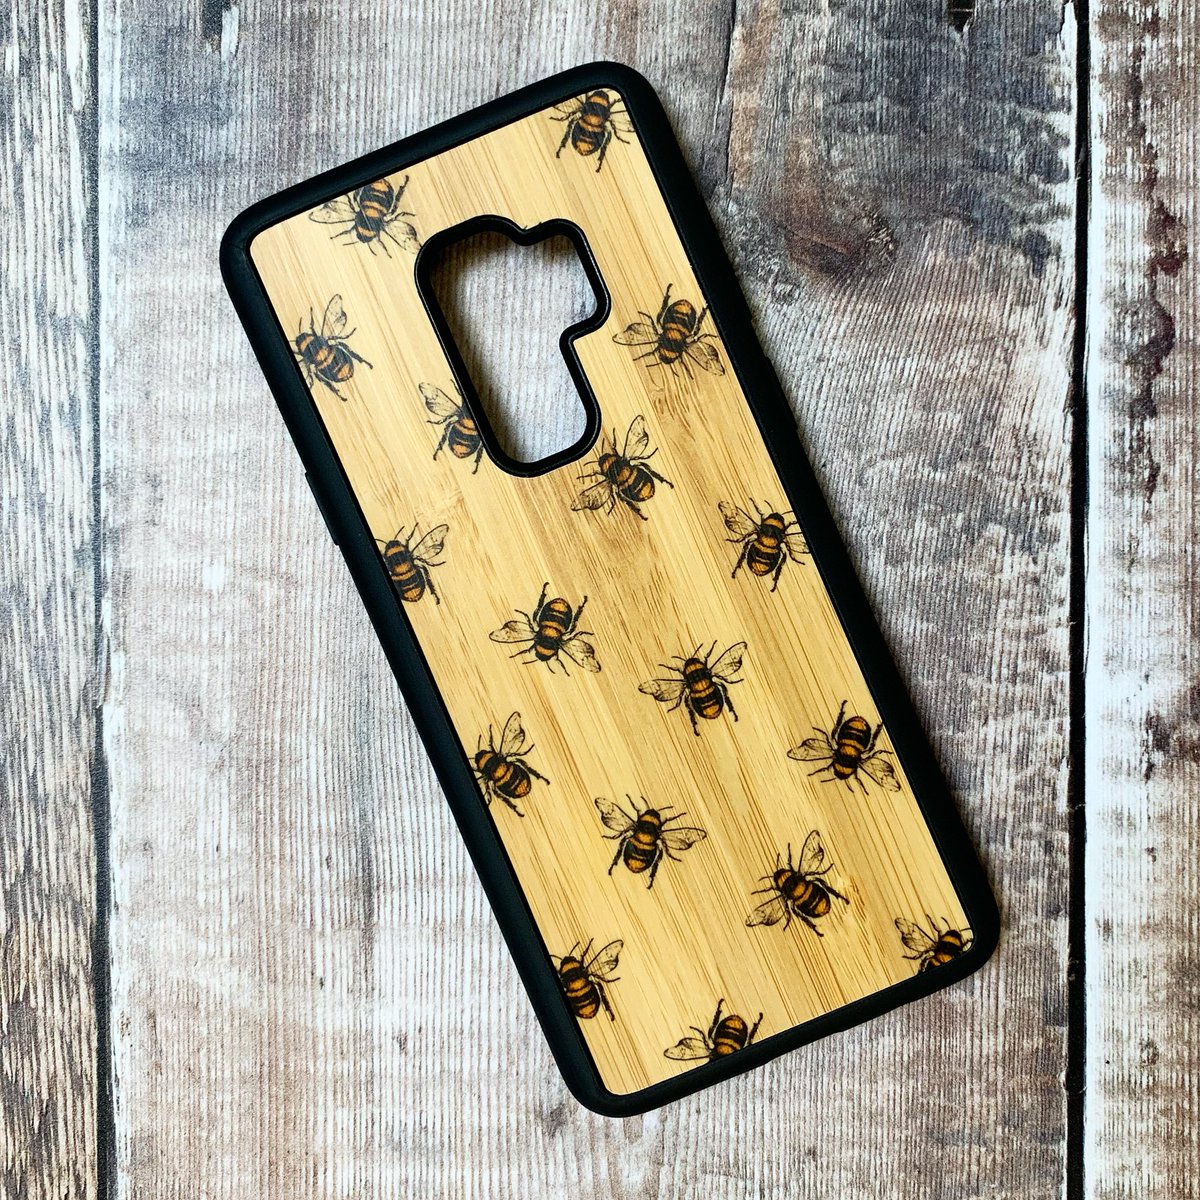 #HappyBeeDay 
Our bee designs are super popular 🐝
Shop casemill.etsy.com 
#BeeDay #savethebees #lovebees #BeeAtHome #HandmadeHour #ScottishCraftHour #MakersHour #strongertogether #SupportScottishBusiness #SmallBiz #shopindie #UKGiftHour #UKEtsyRT